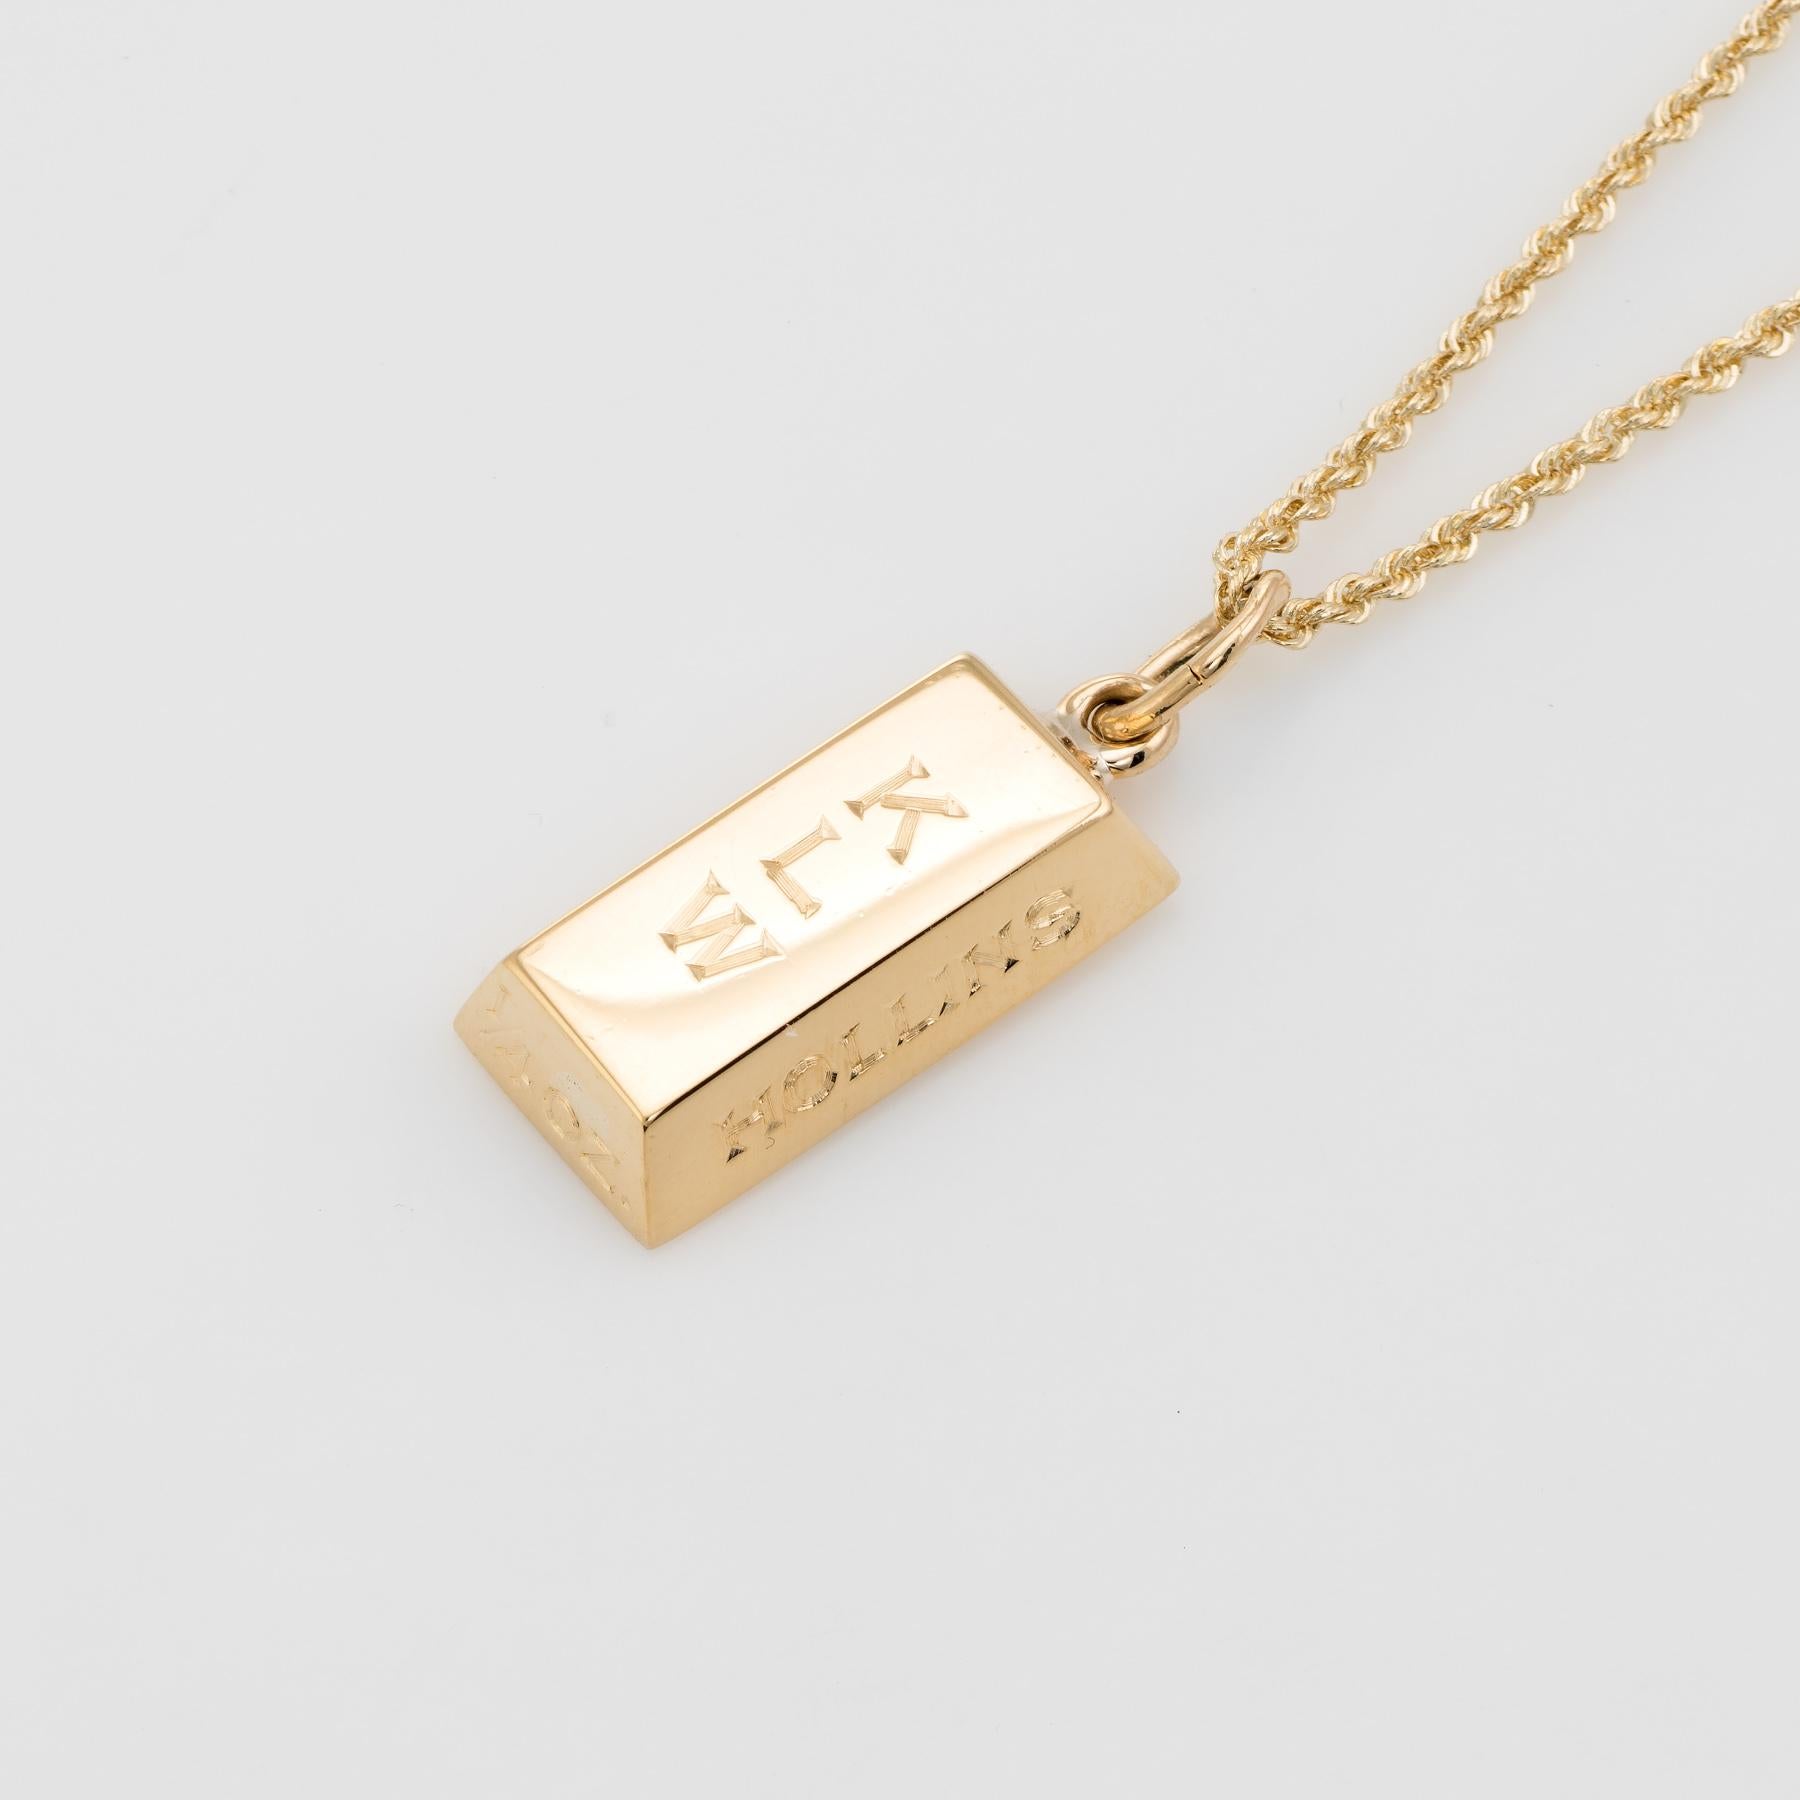 cartier gold brick pendant